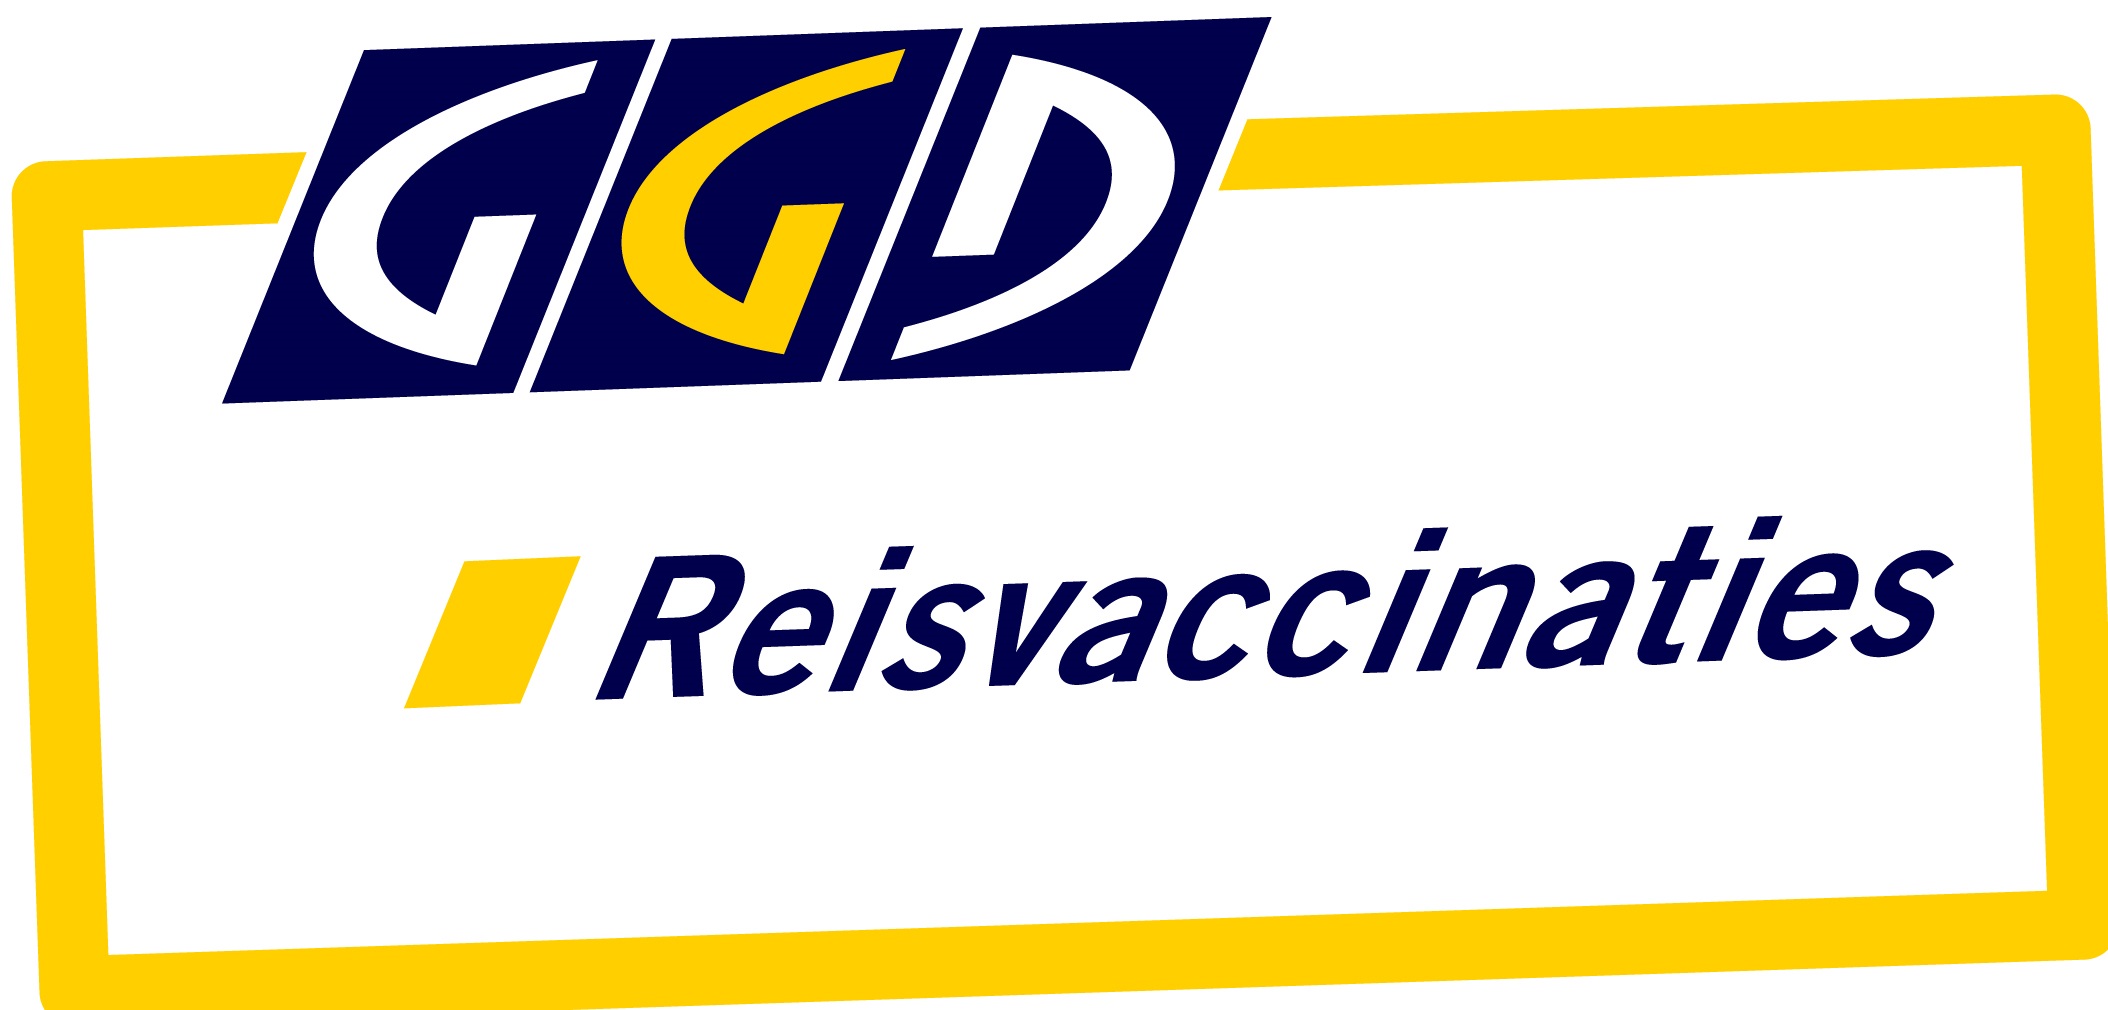 Logo GGD Reisvaccinaties